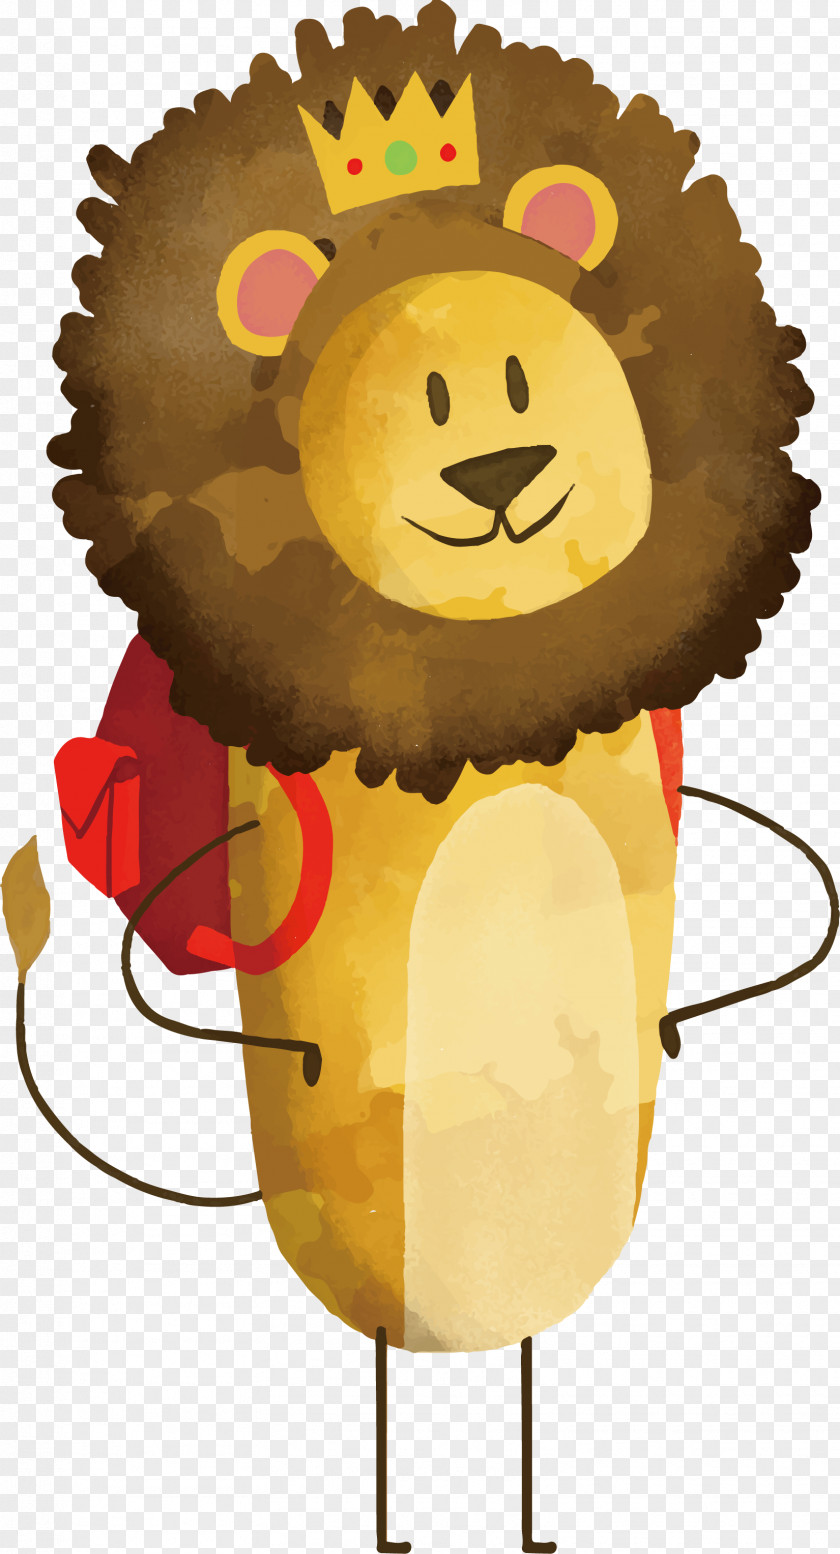 Hand Painted Lion King Cartoon Tiger Illustration PNG